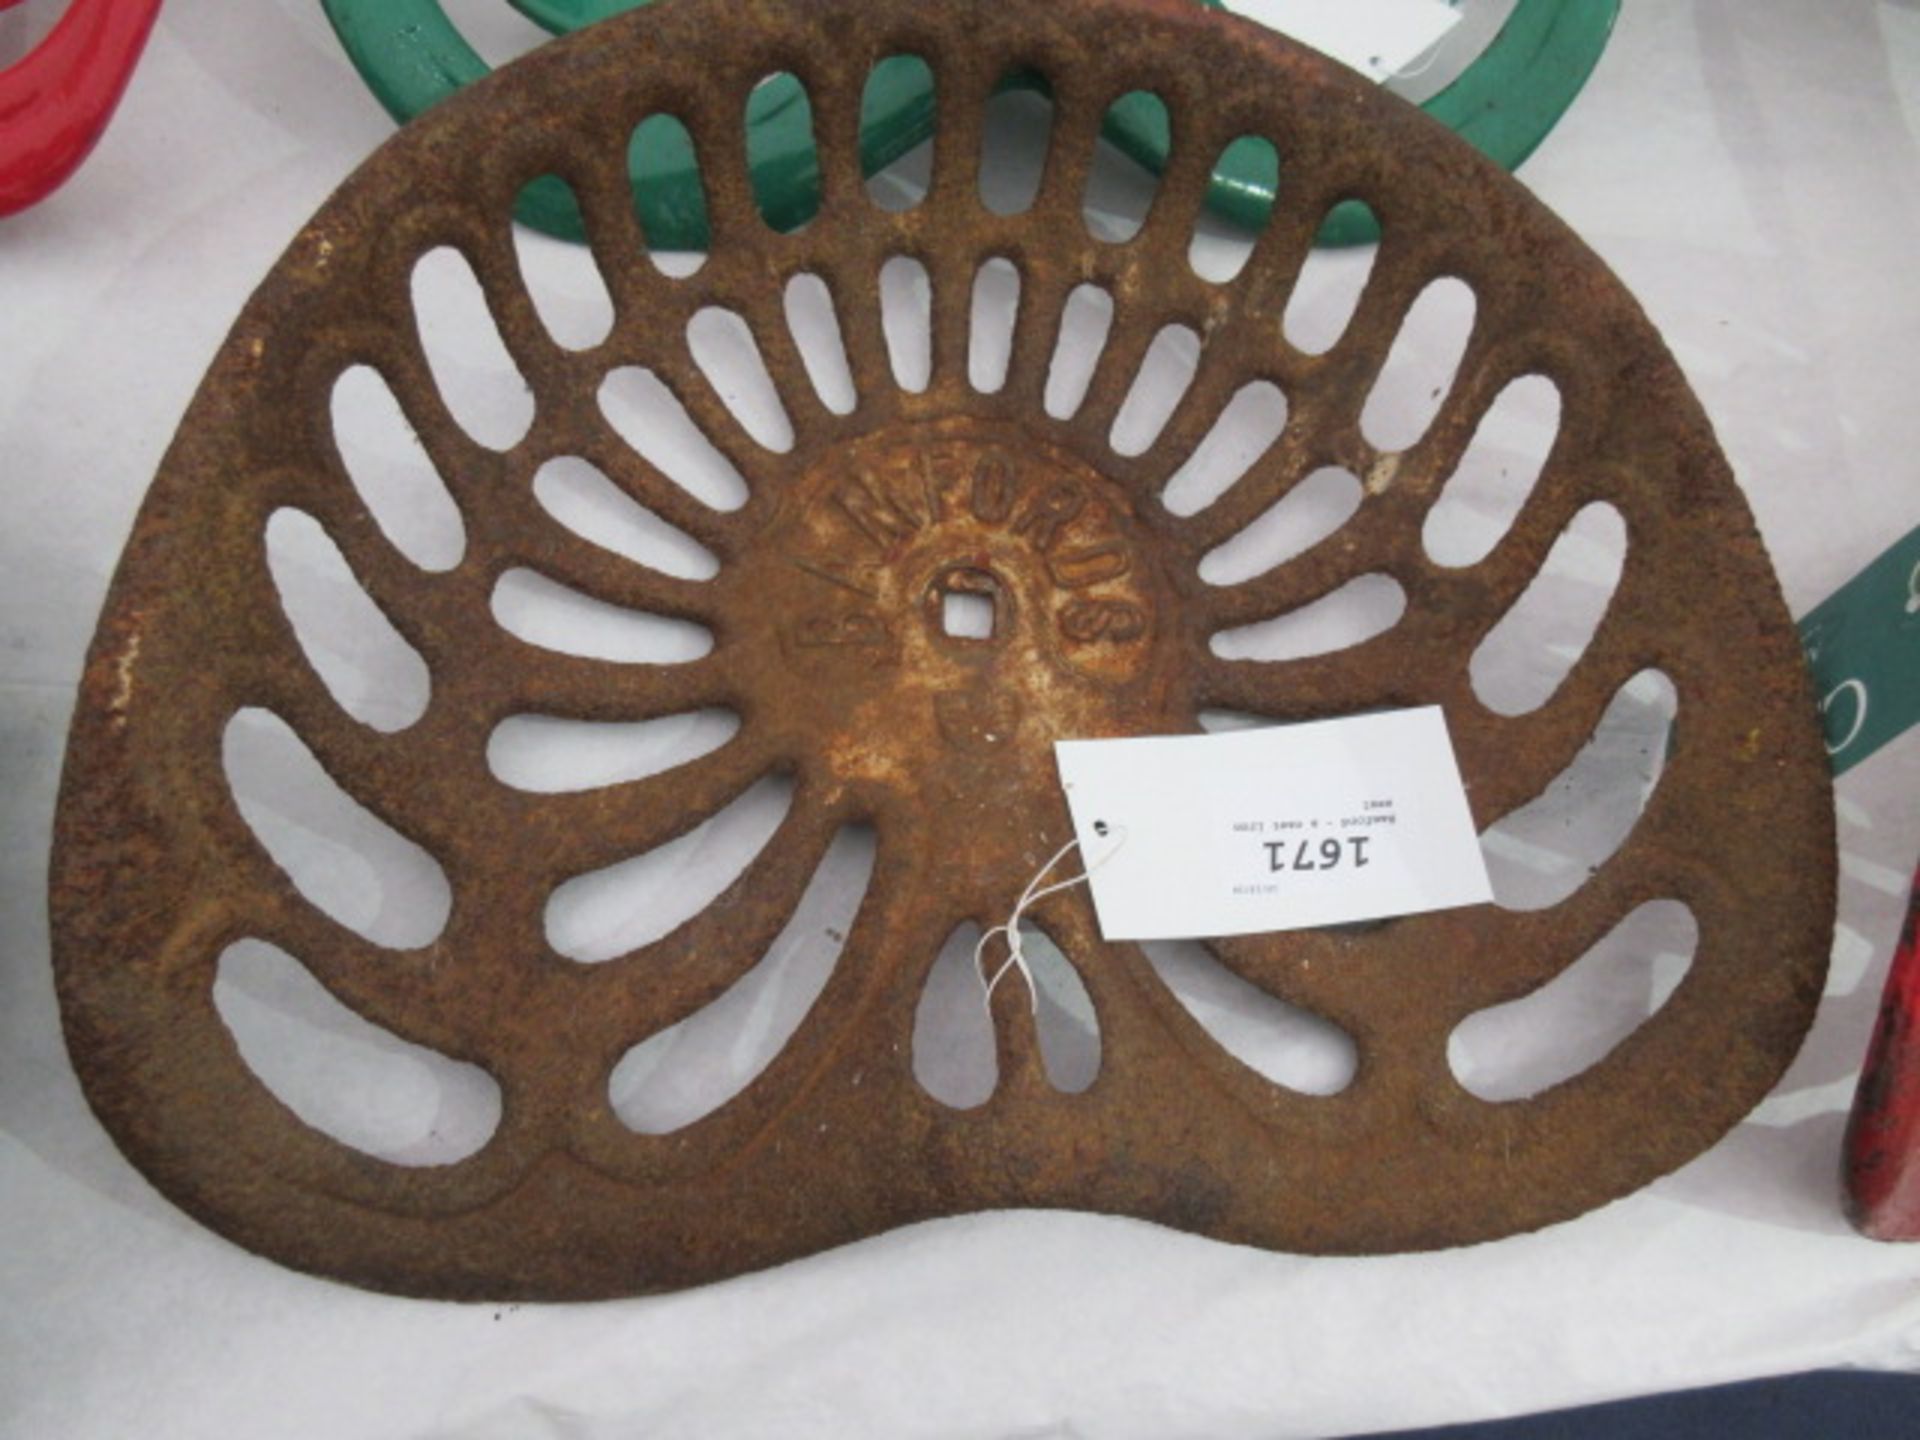 Bamford - a cast iron seat